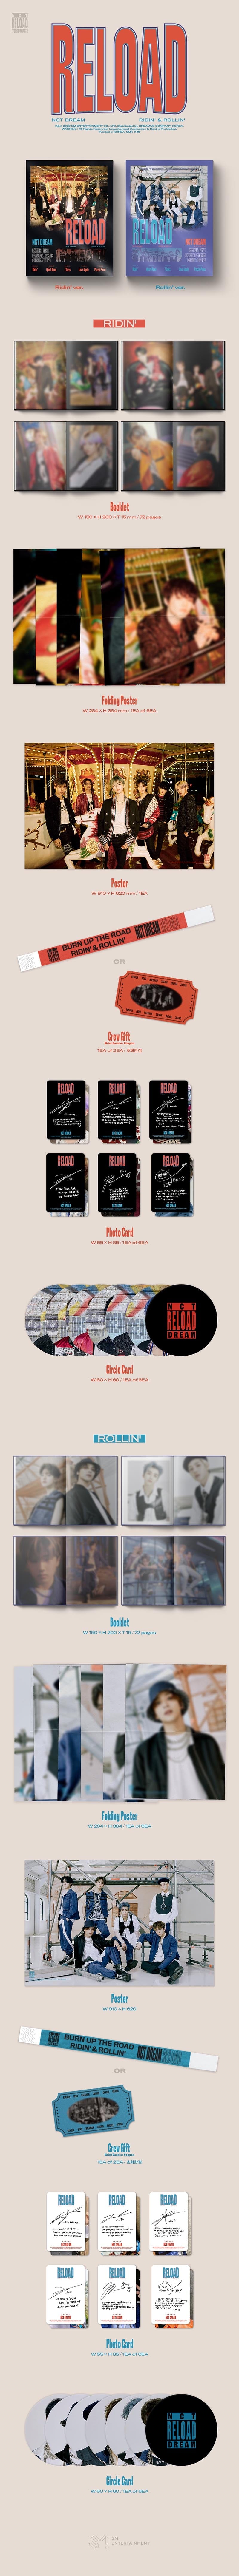 Korea Pop Store NCT DREAM - RELOAD Kawaii Gifts 8809440339822